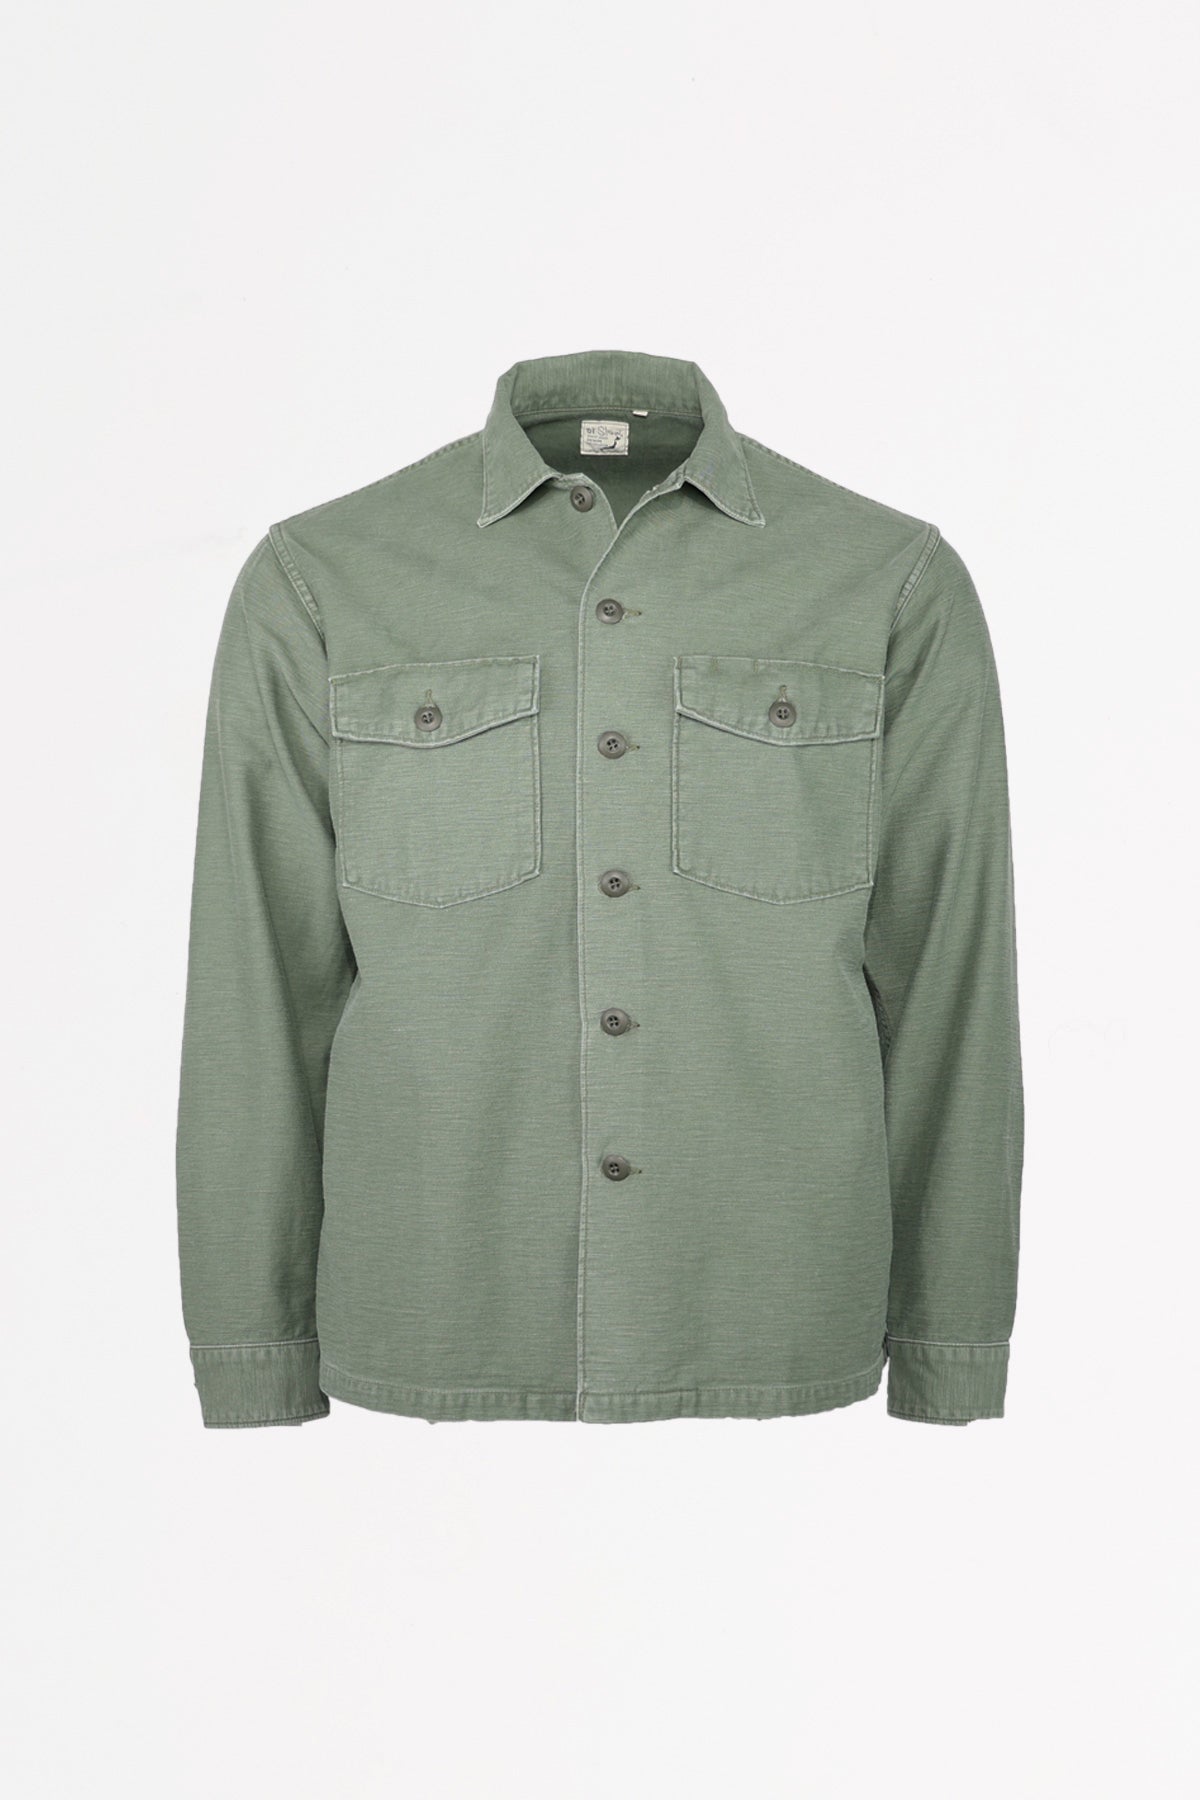 US Army Fatigue Shirt - Green Used